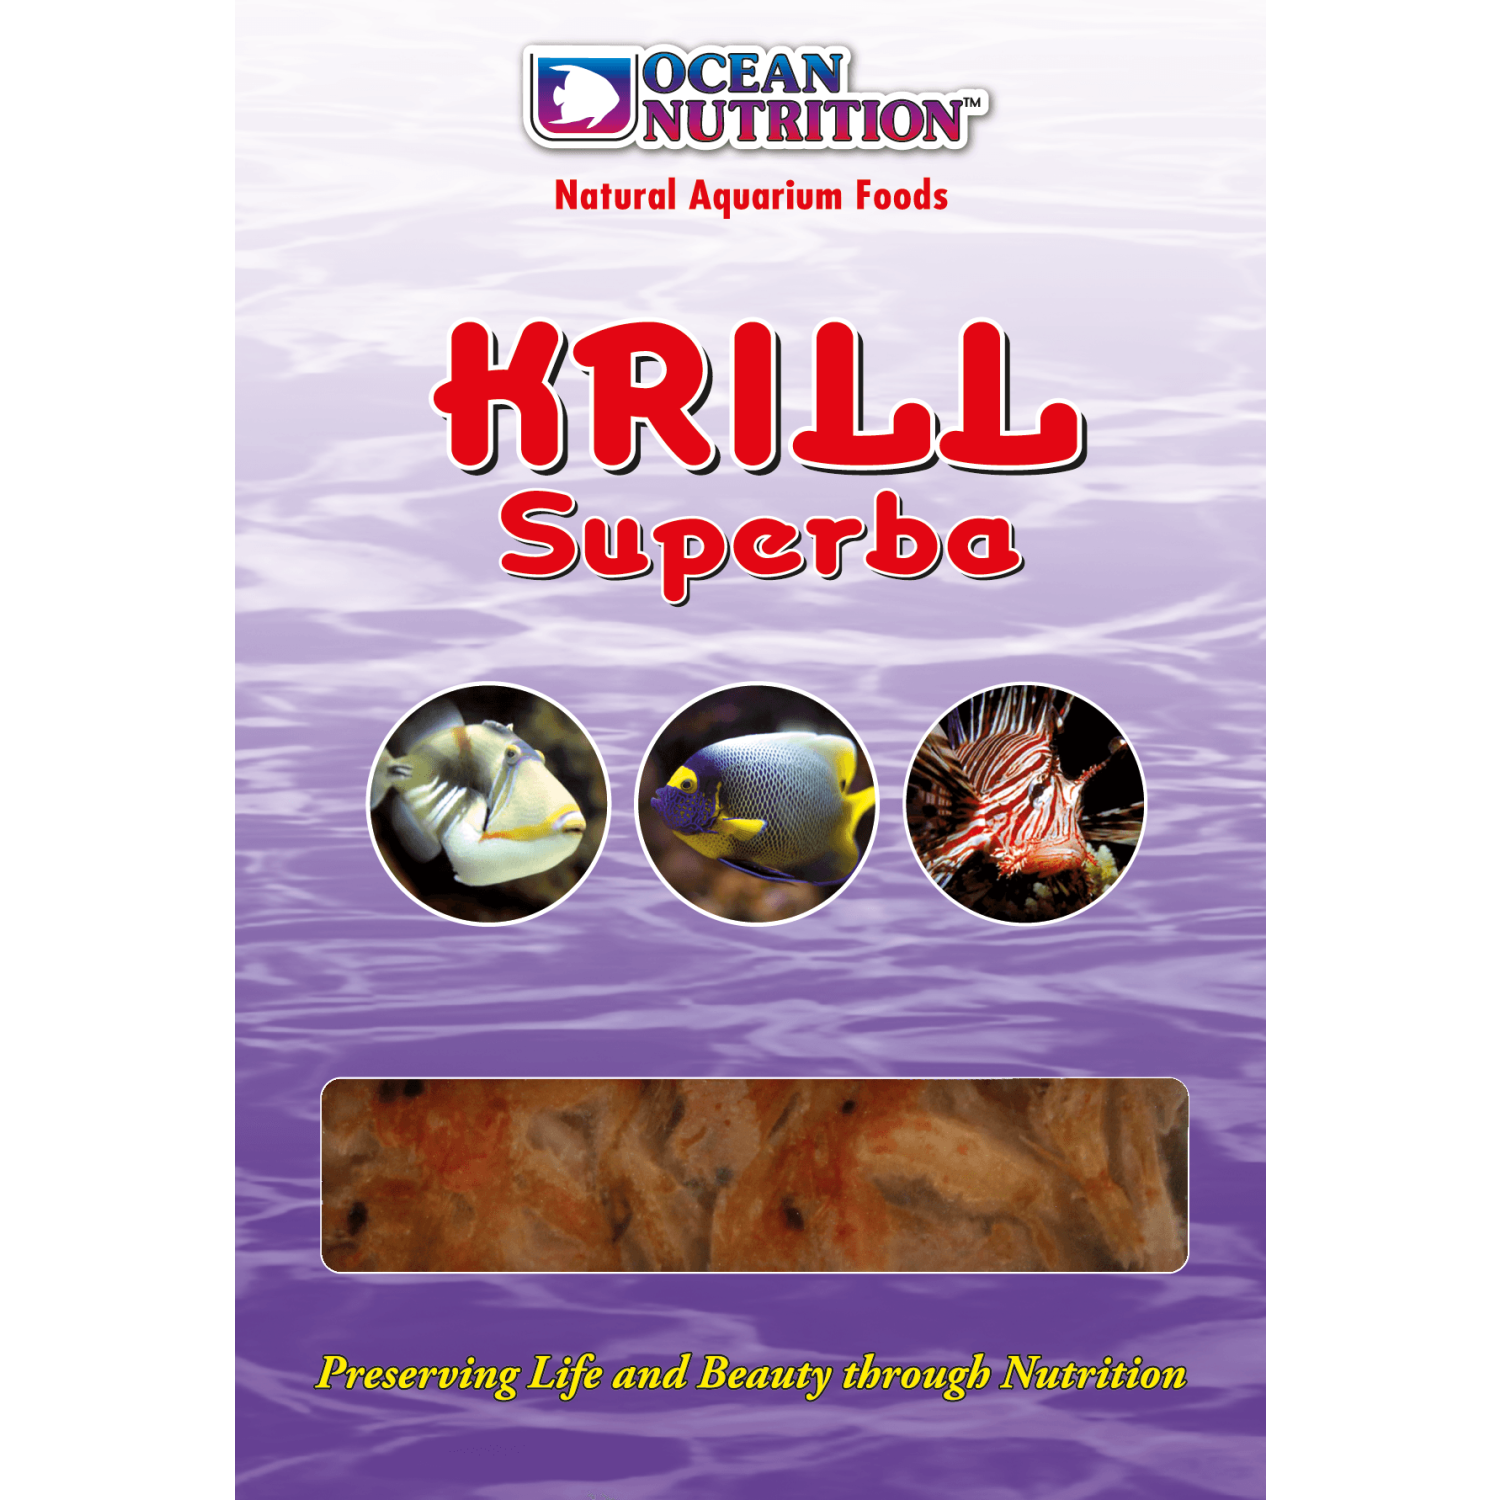 Ocean Nutrition Whole Krill Superba, 3,40 €